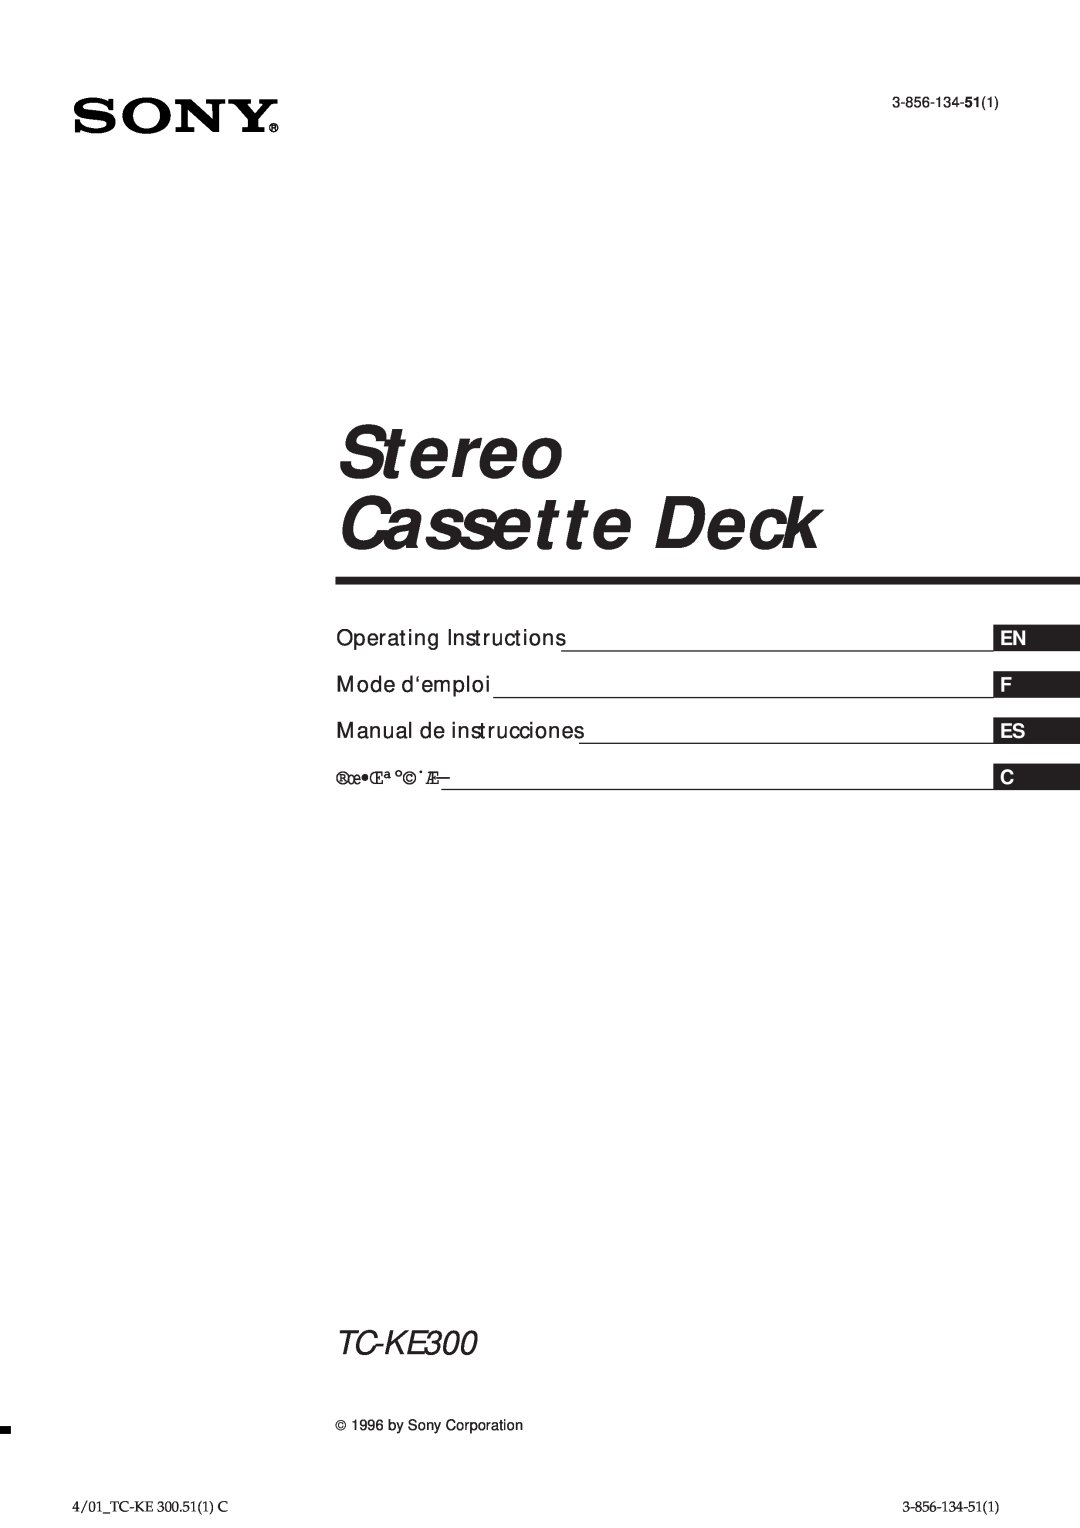 Sony TC-KE300 operating instructions Stereo Cassette Deck, Operating Instructions, Mode d‘emploi, Manual de instrucciones 